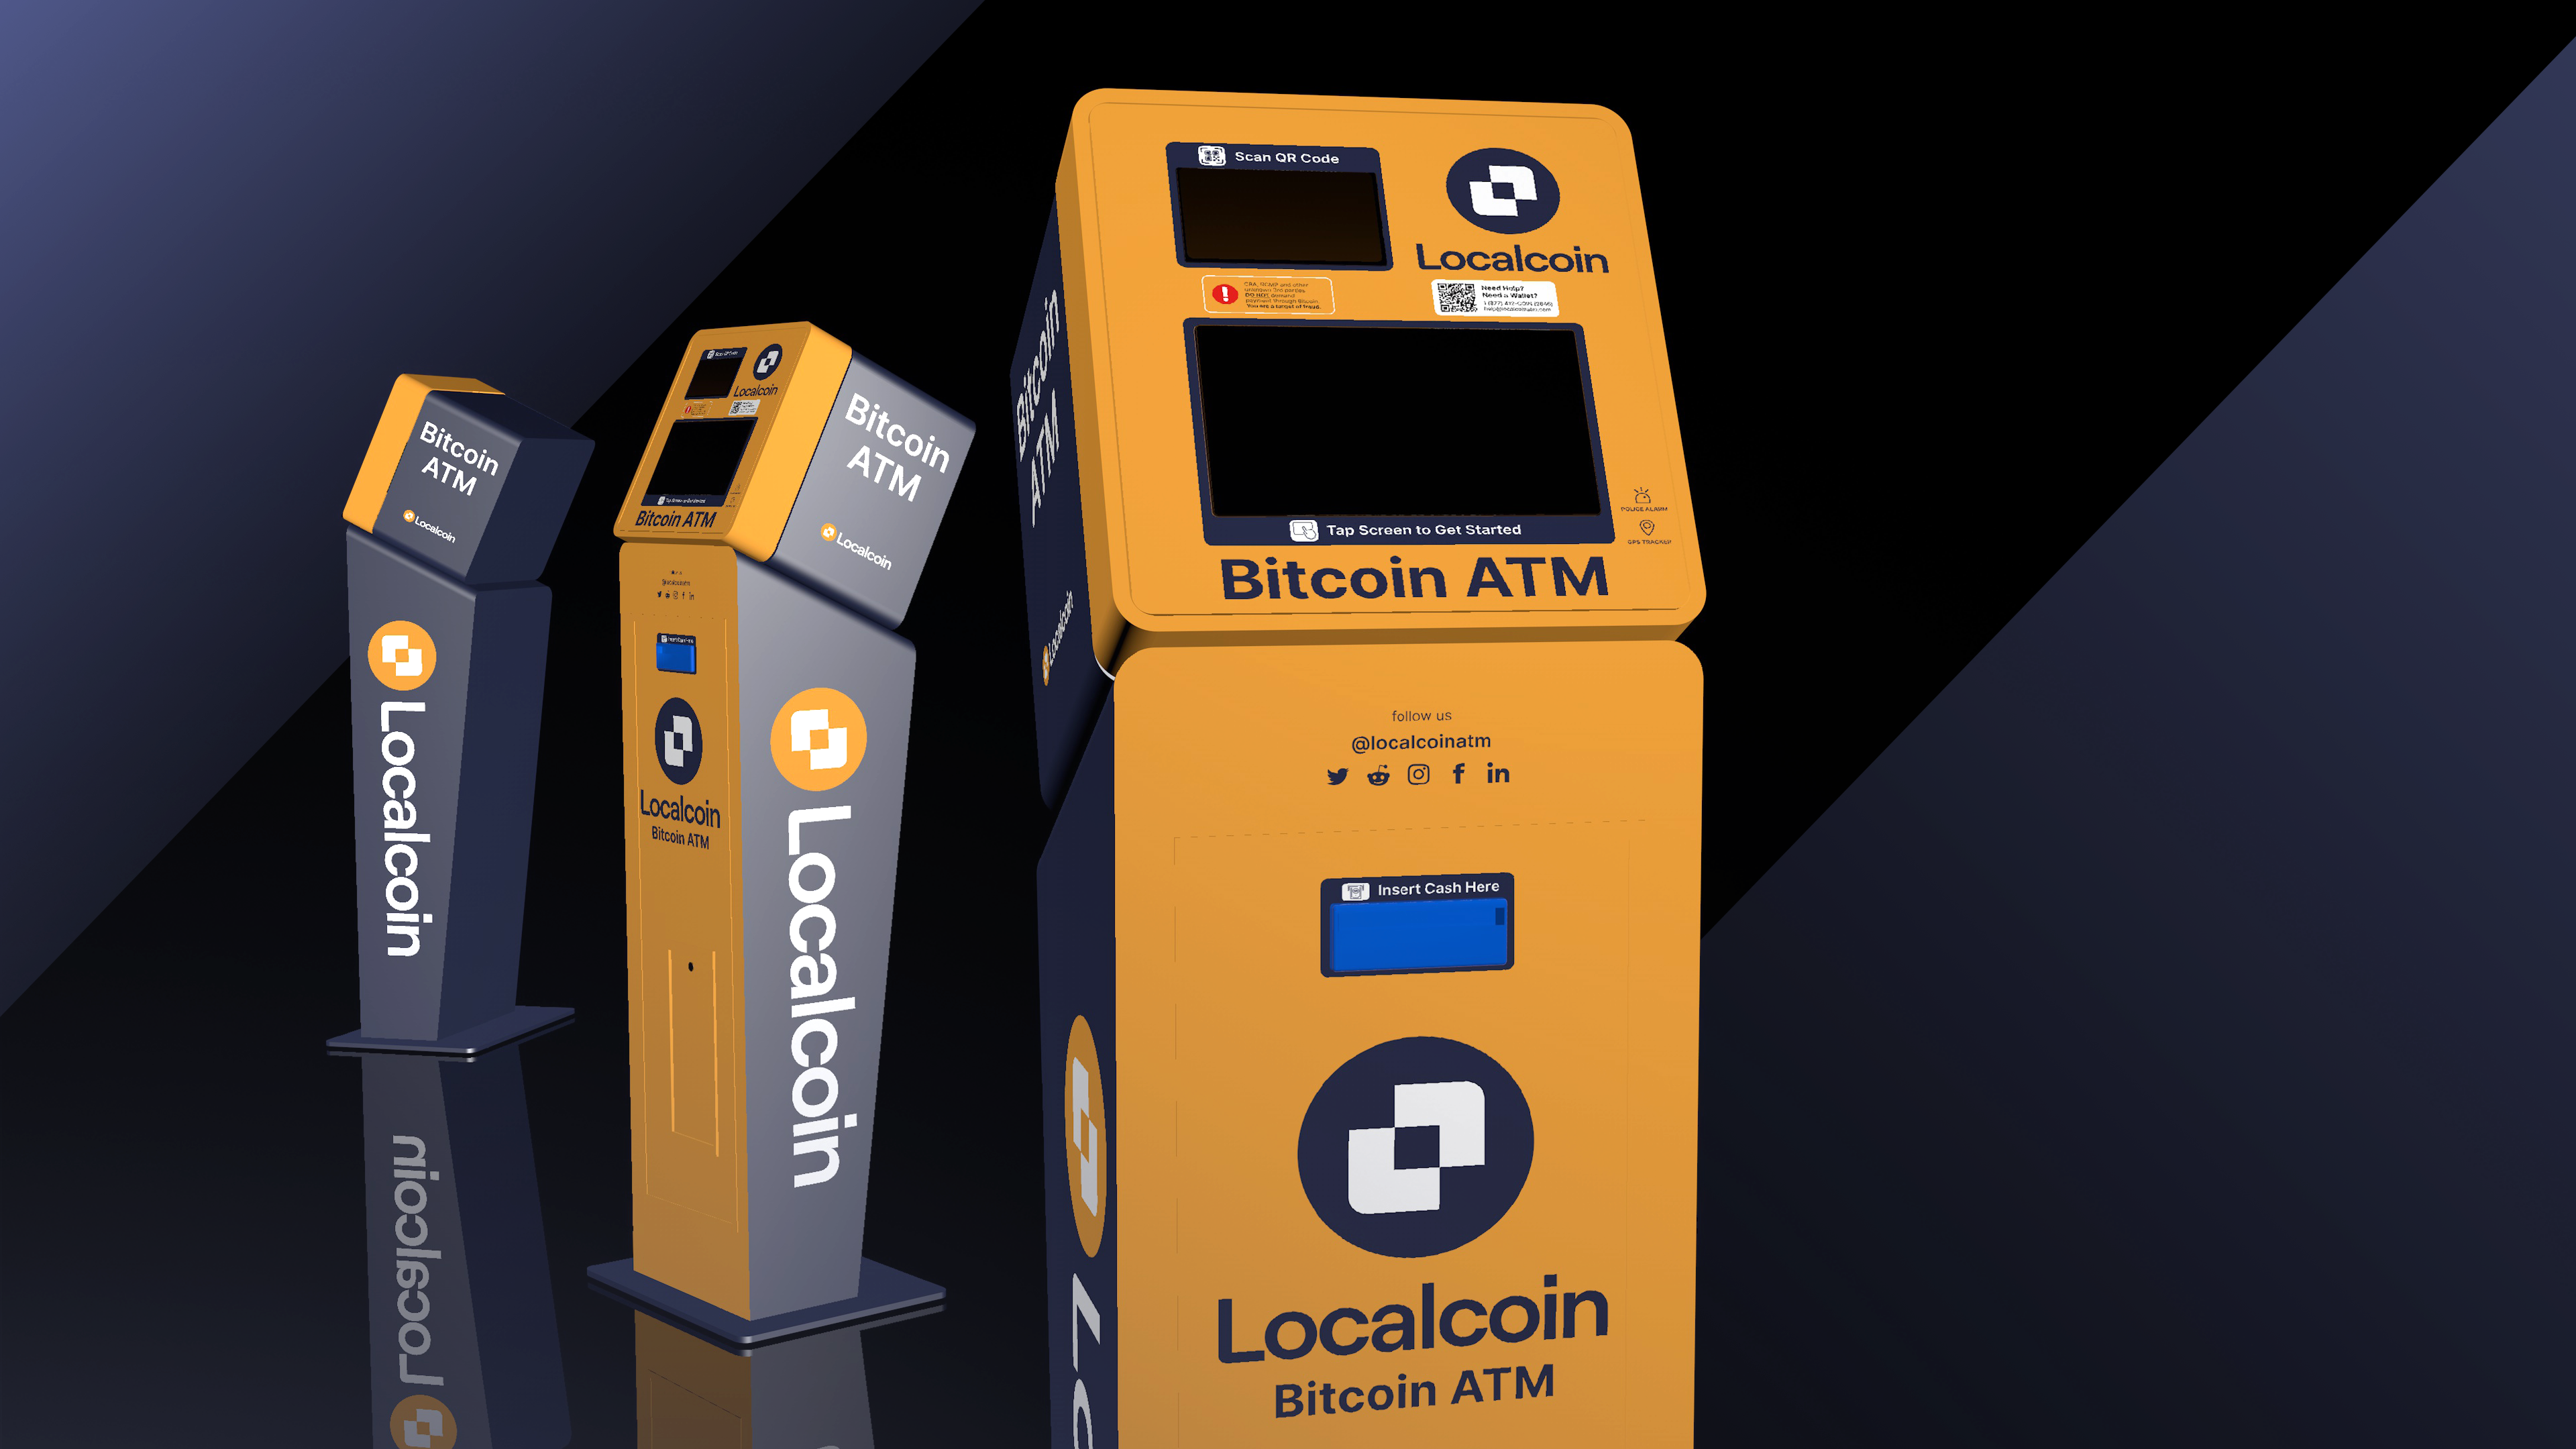 Localcoin Bitcoin ATM - Depanneur 7 Jours